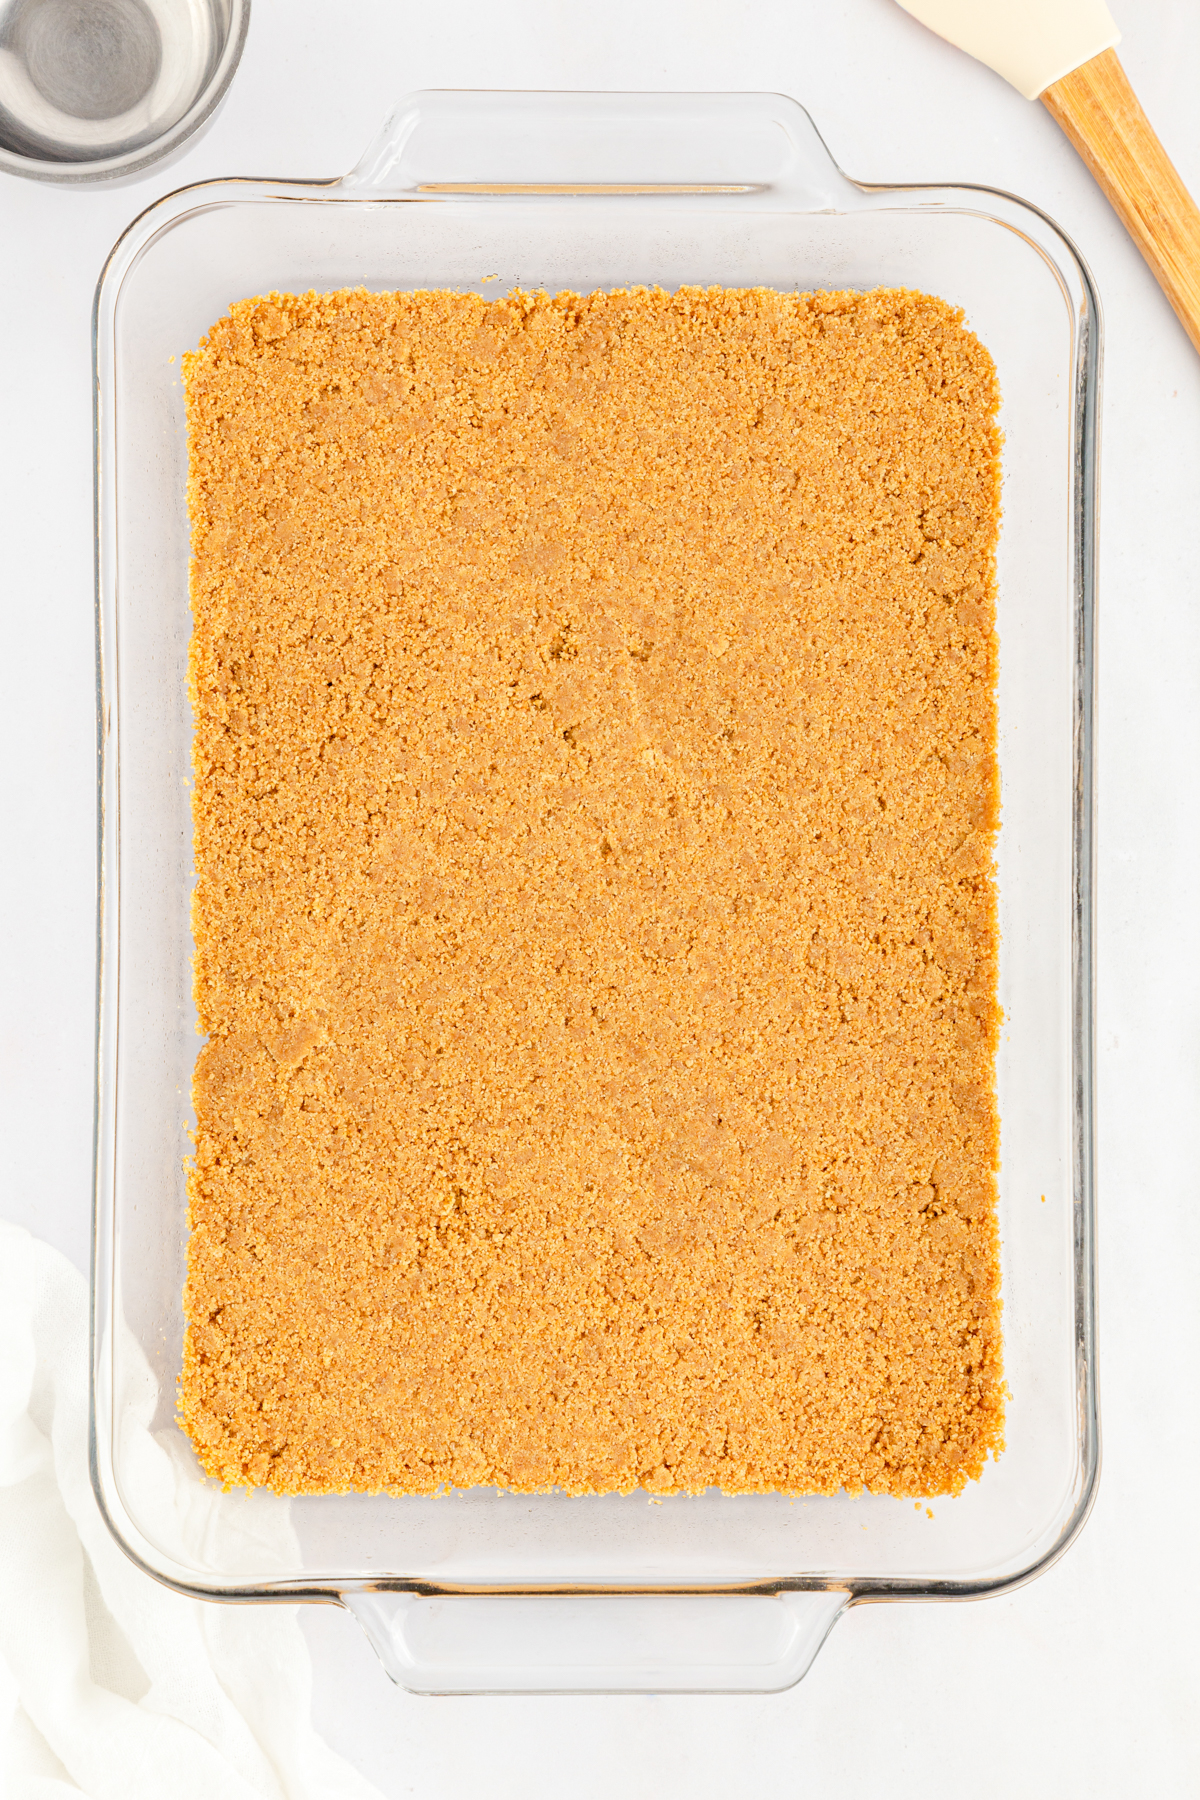 graham cracker crust in a baking pan